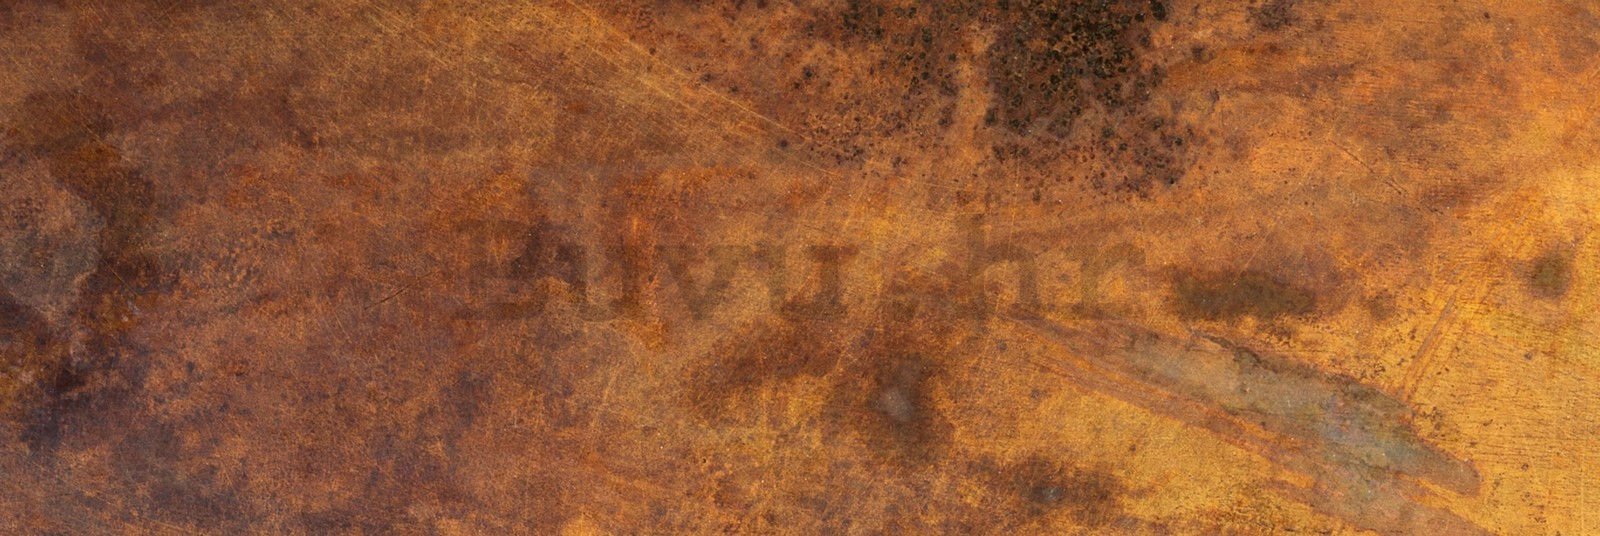 Samoljepljiva periva tapeta za kuhinju - Bakrena obloga, 180x60 cm